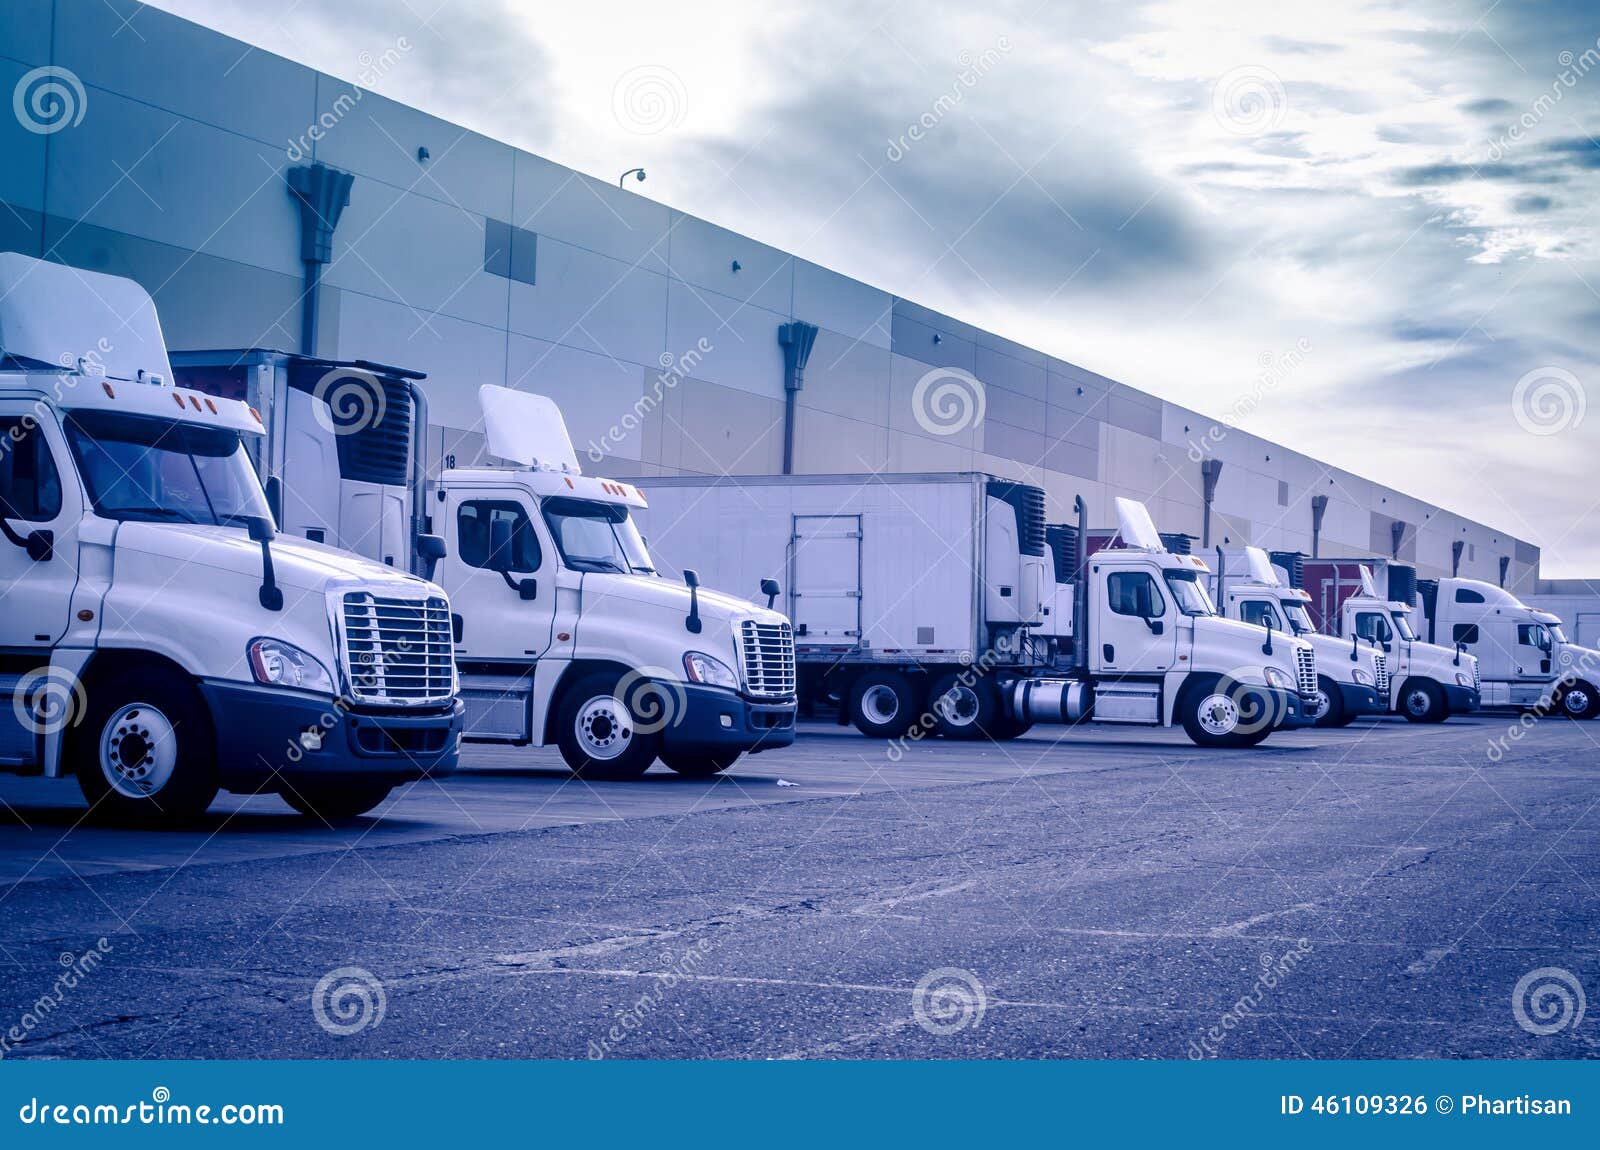 transport shipping logistics concept image